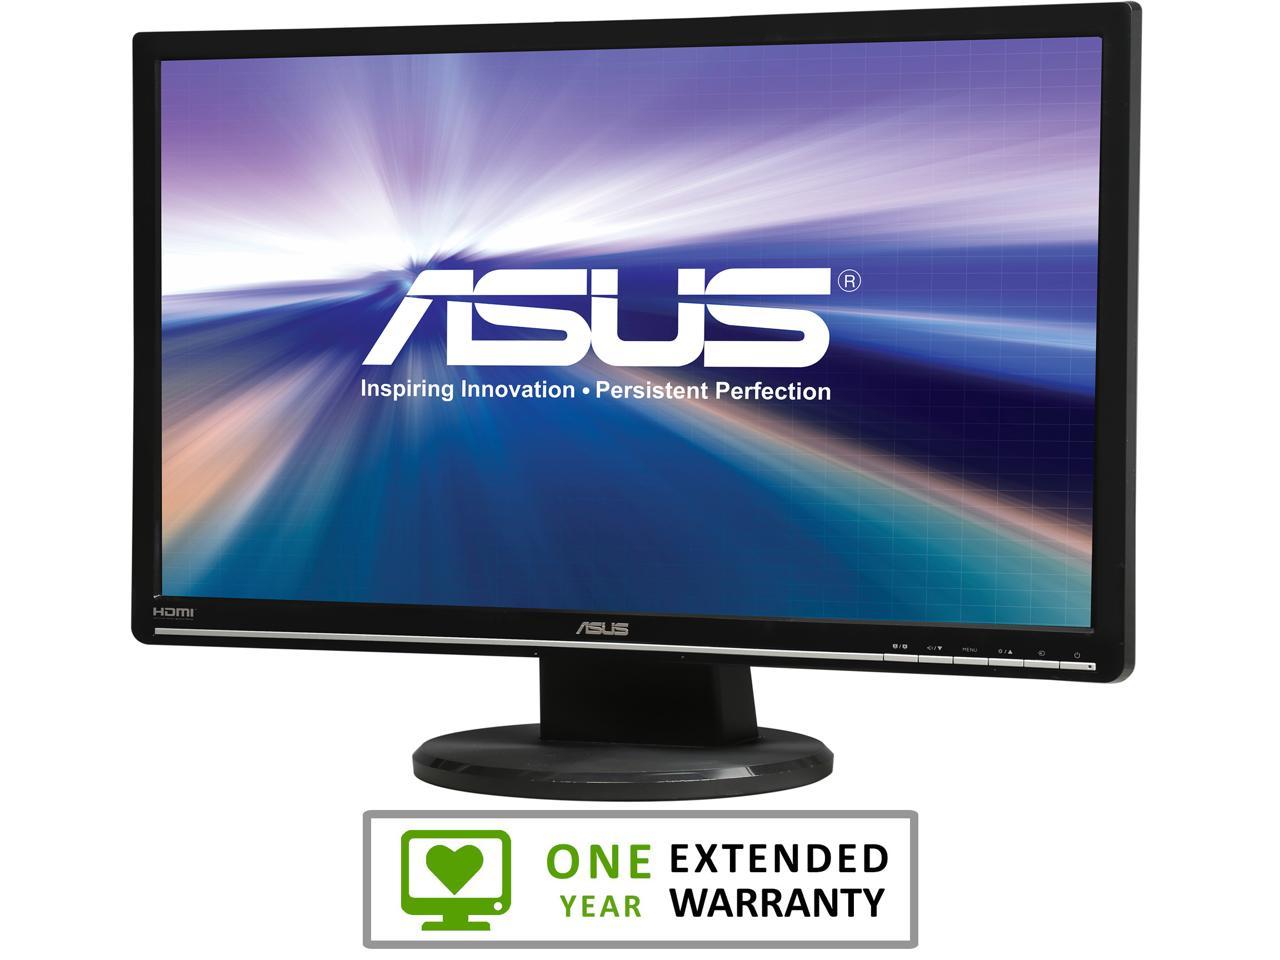 ASUS VW246H Wide LCD Monitor SmartView Speakers HDMI VGA DVI Full HD 1080p VW246